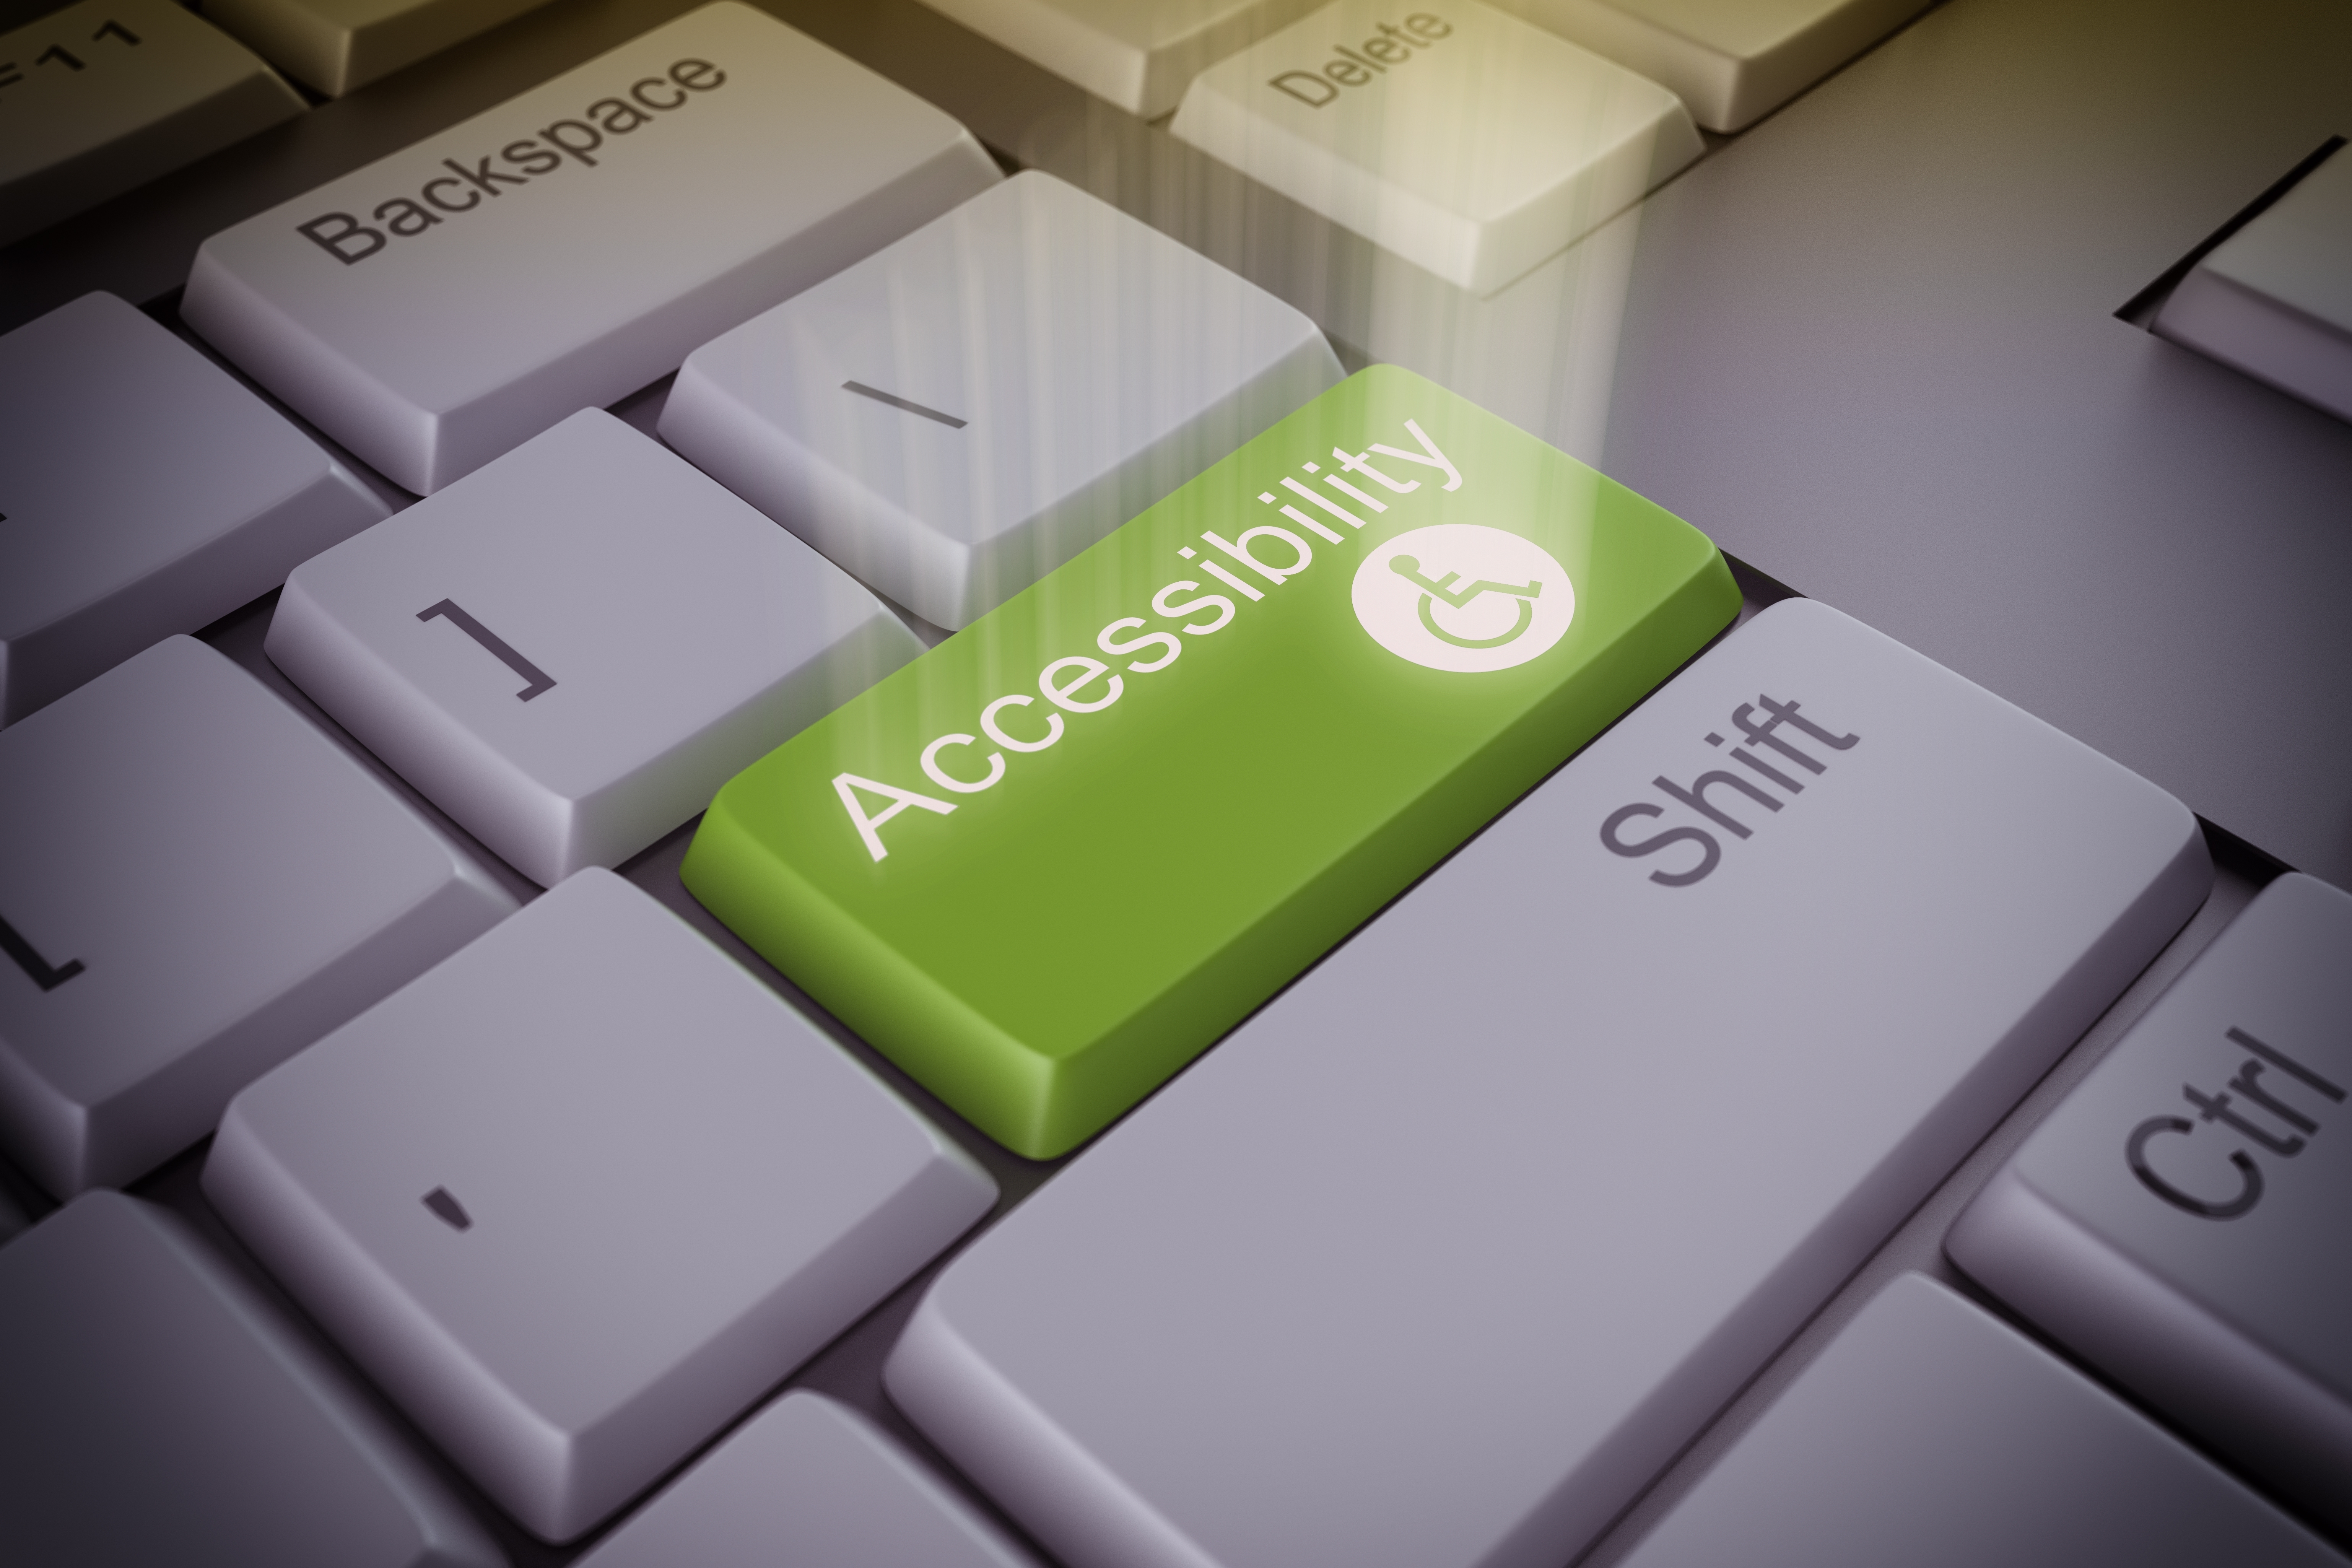 Acessibility Key on keyboard